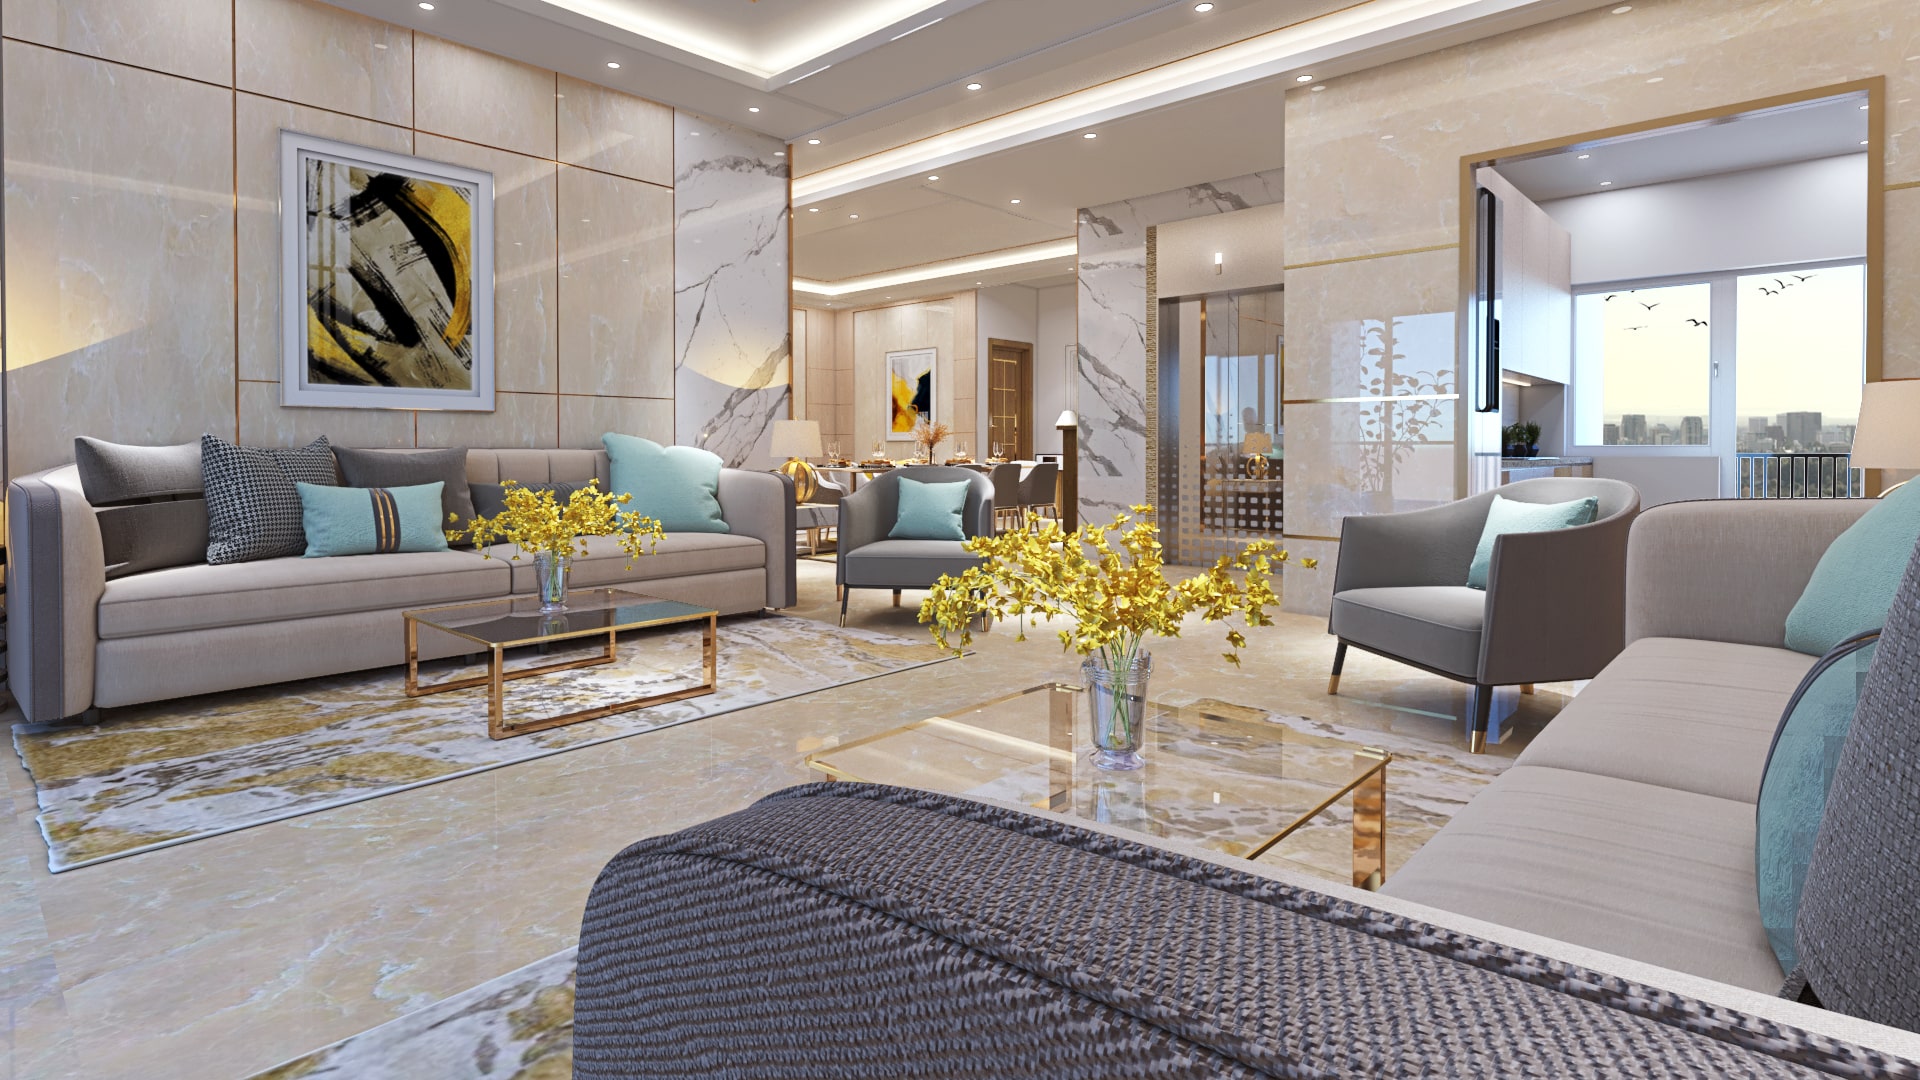 Interior Design of Residential Luxury Flats